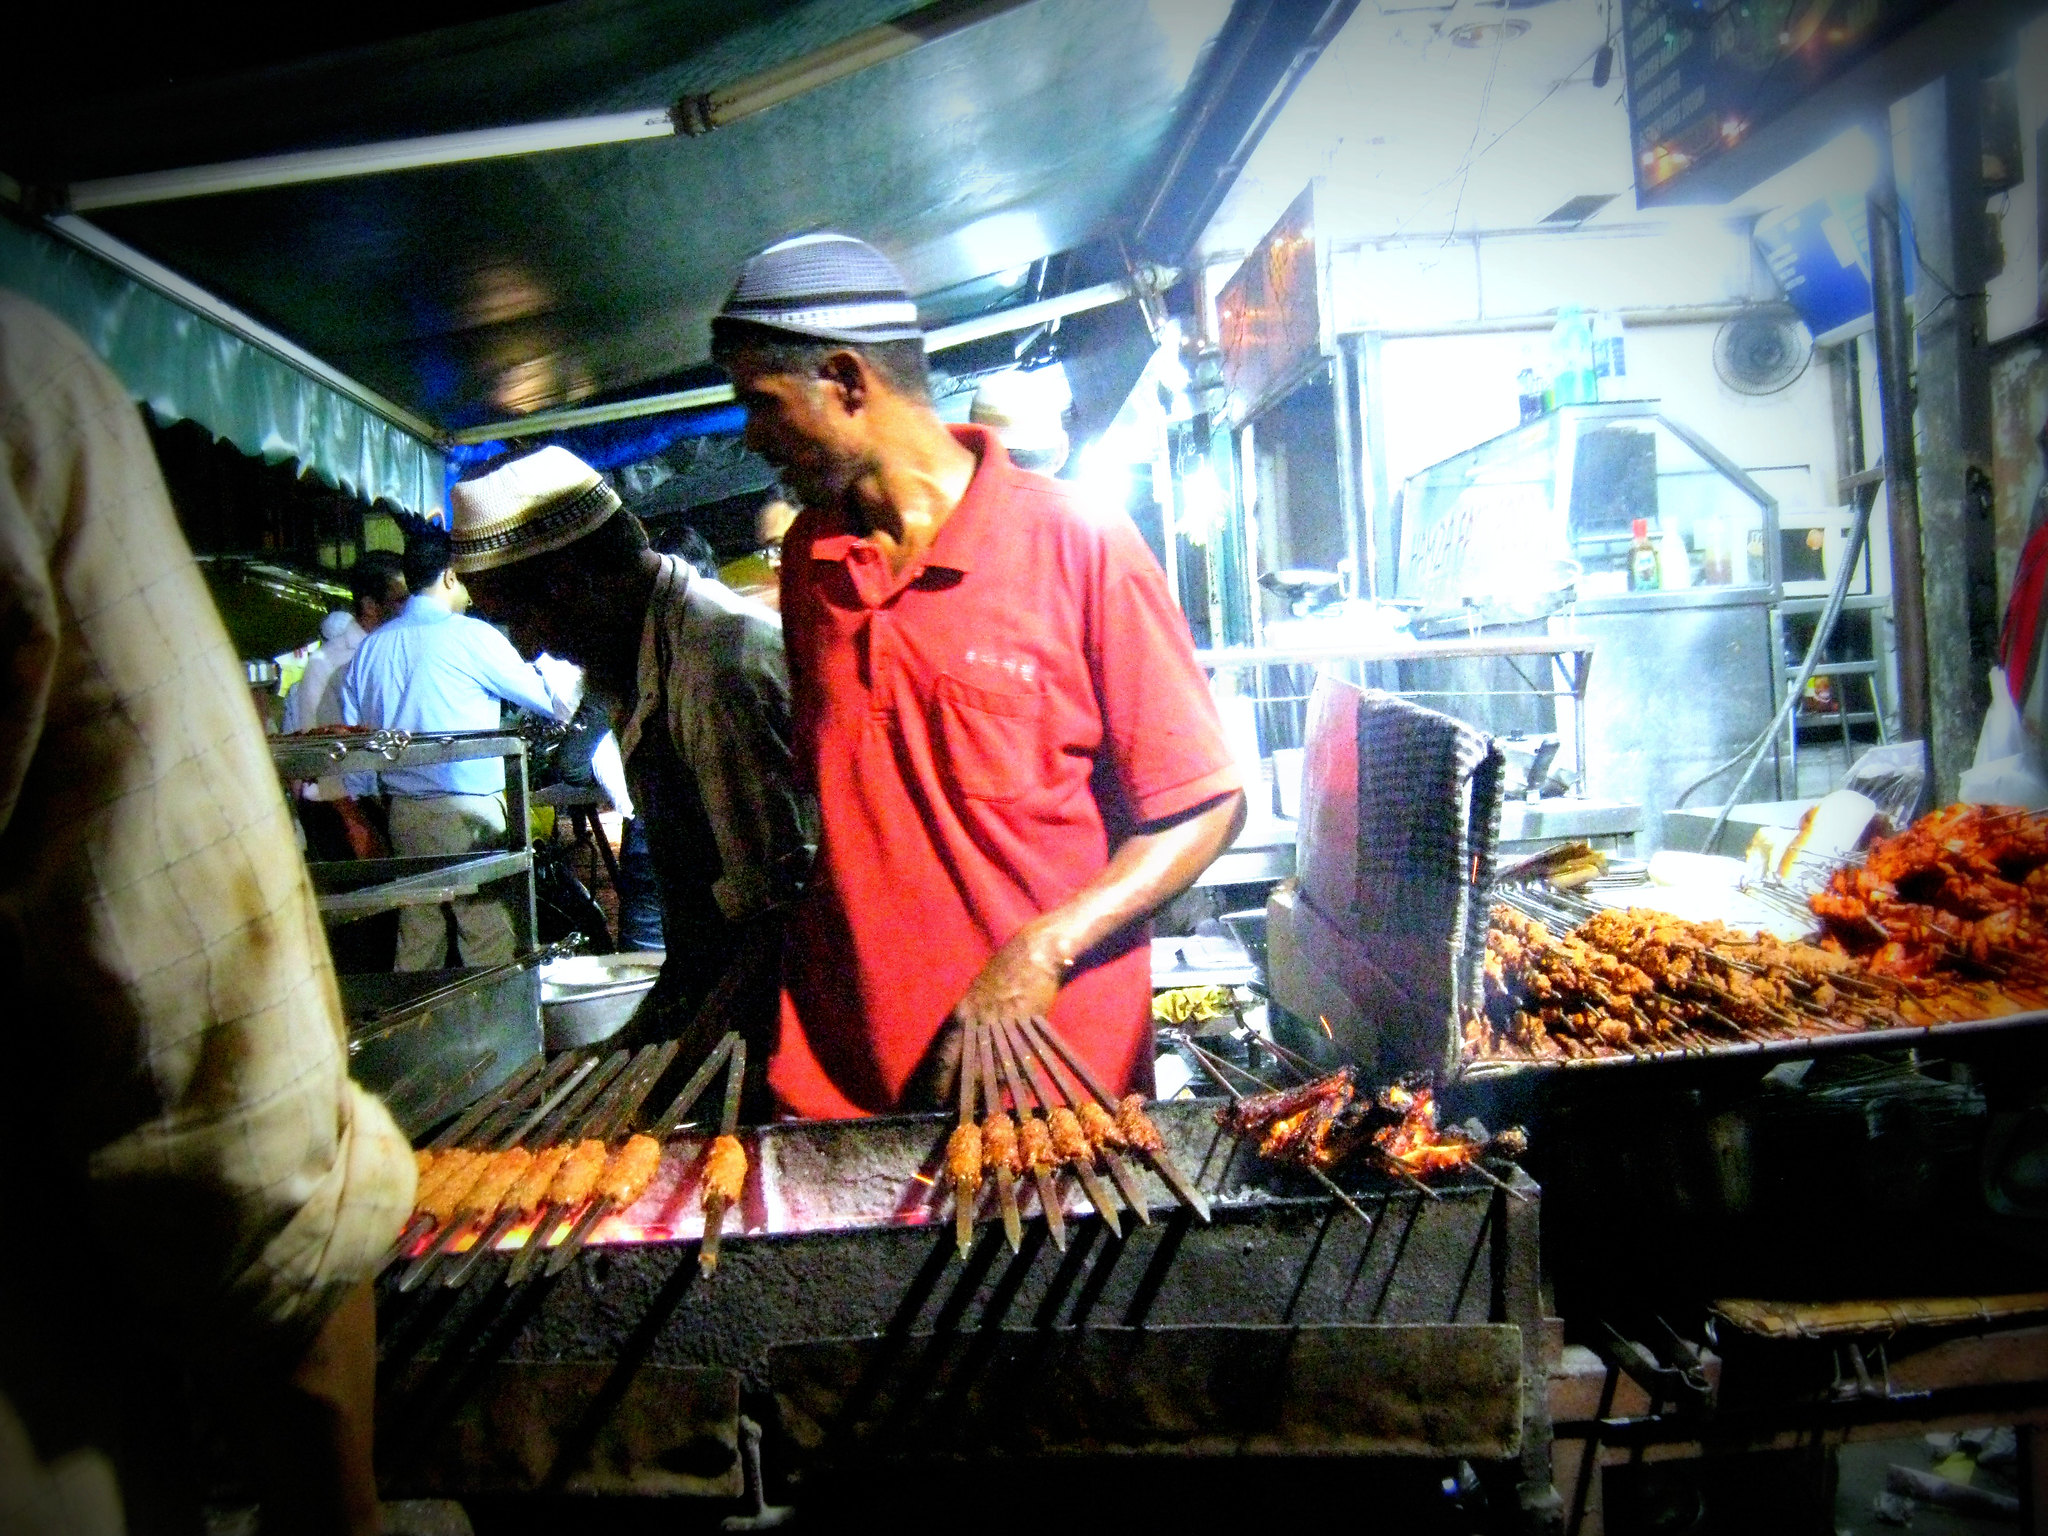 Kebabs being prepared, Image Source: Wikimedia Commons